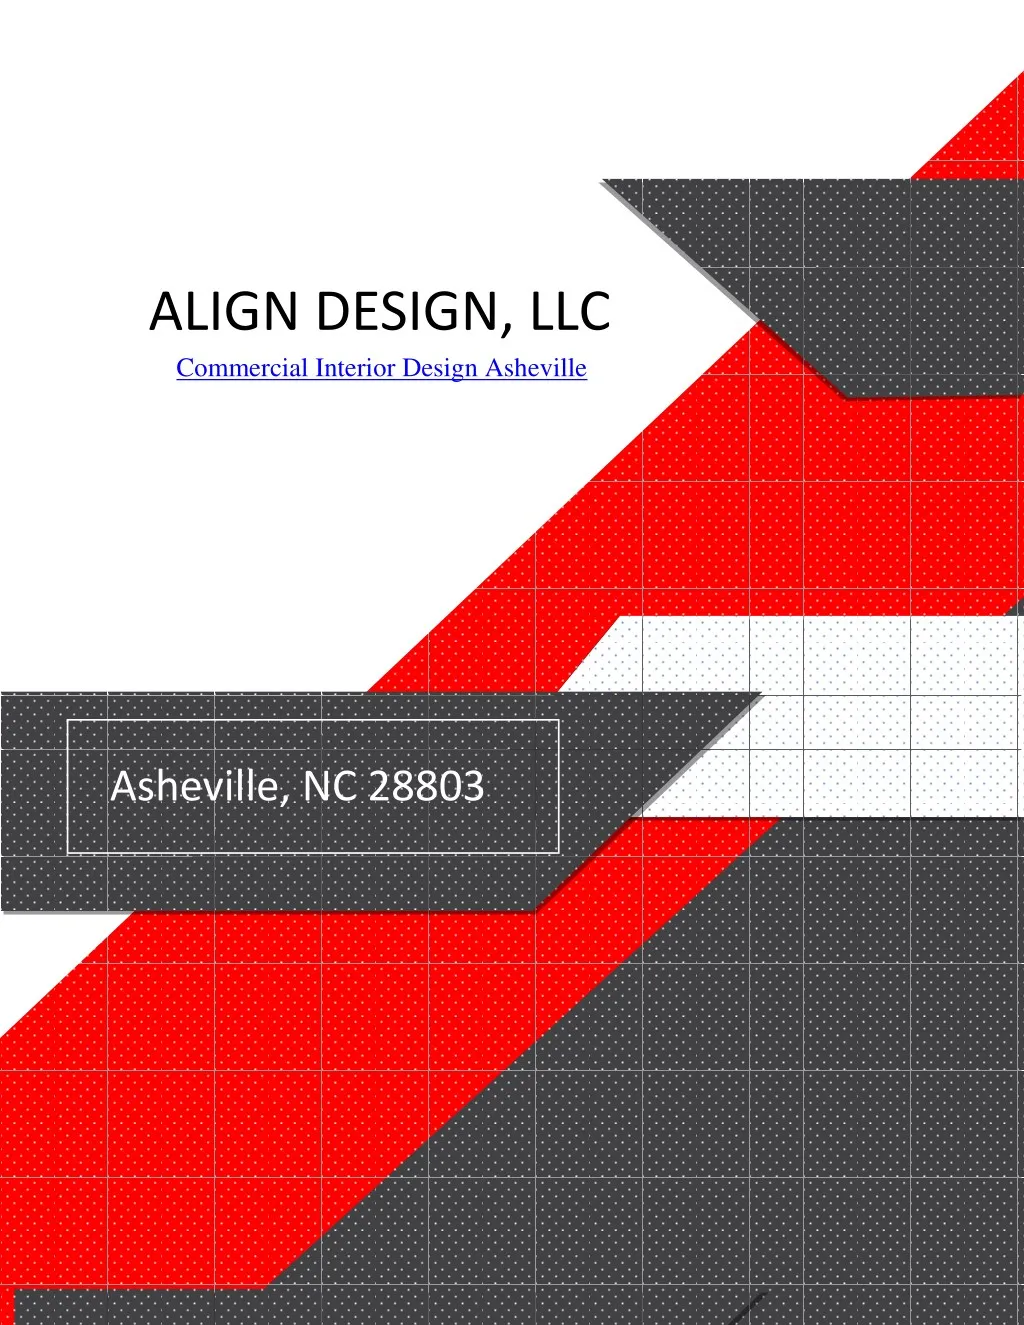 align design llc commercial interior design n.